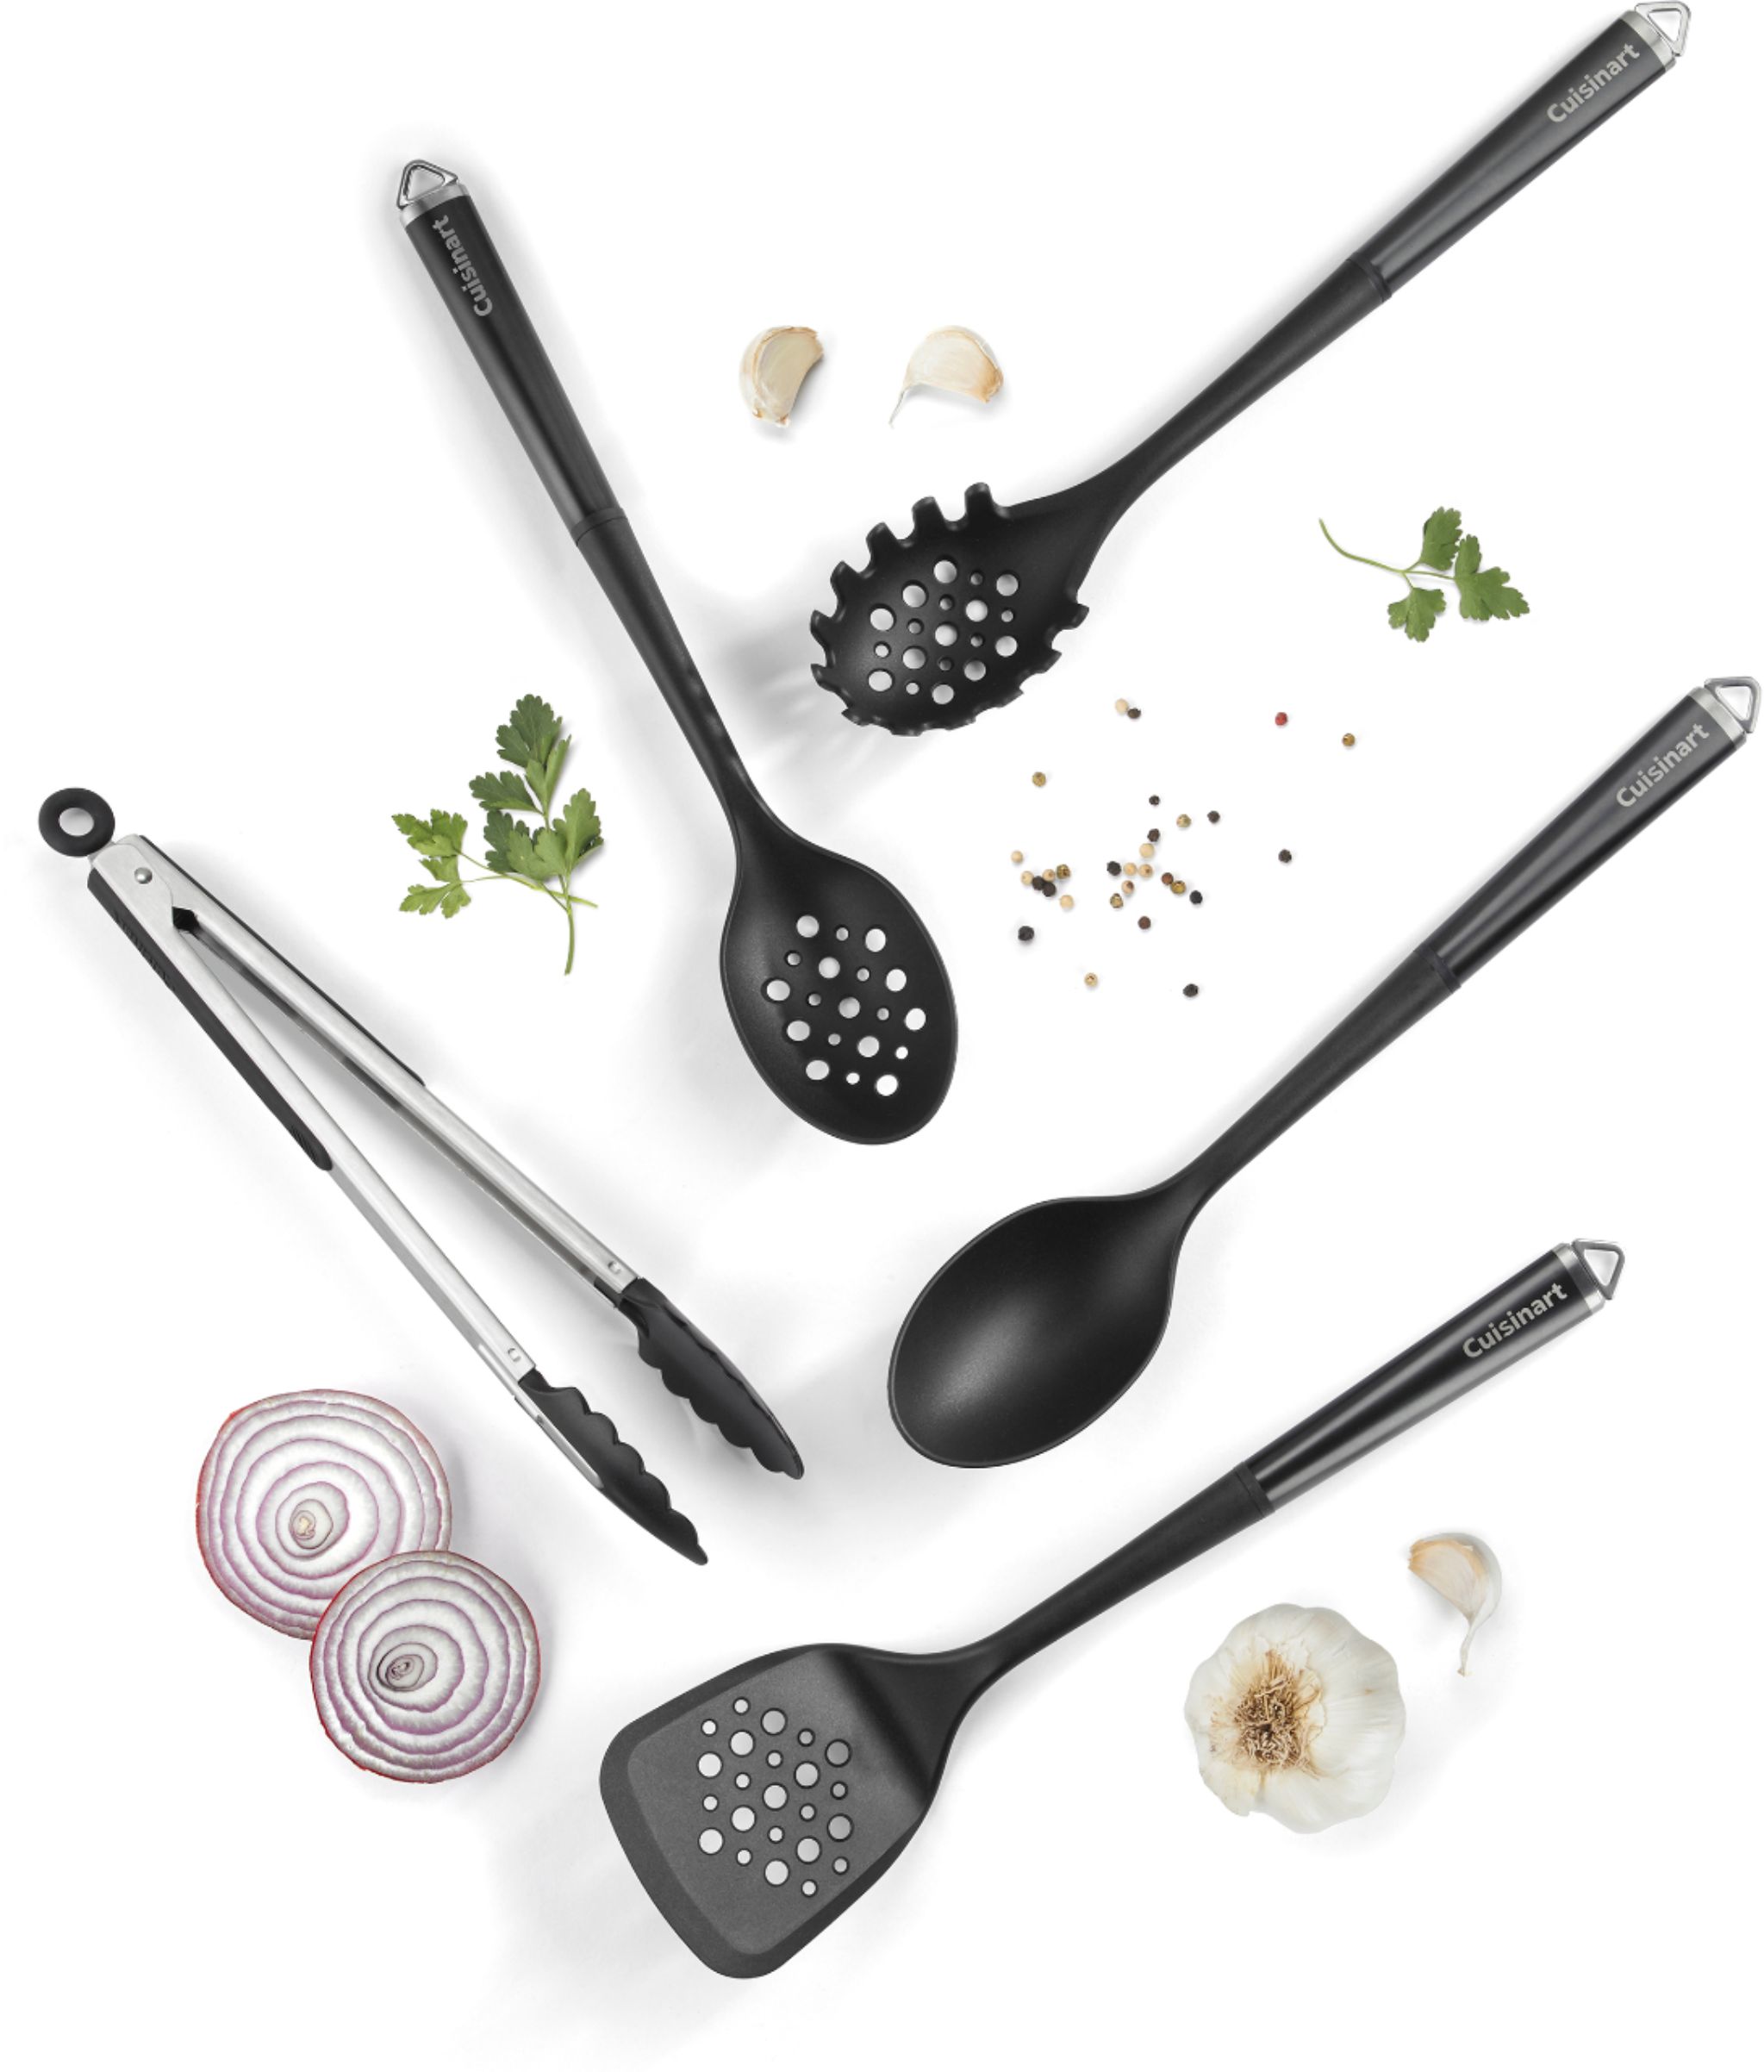 Cuisinart 5-Piece Stainless Steel Hollow Handle Cutlery Set – ShopEZ USA